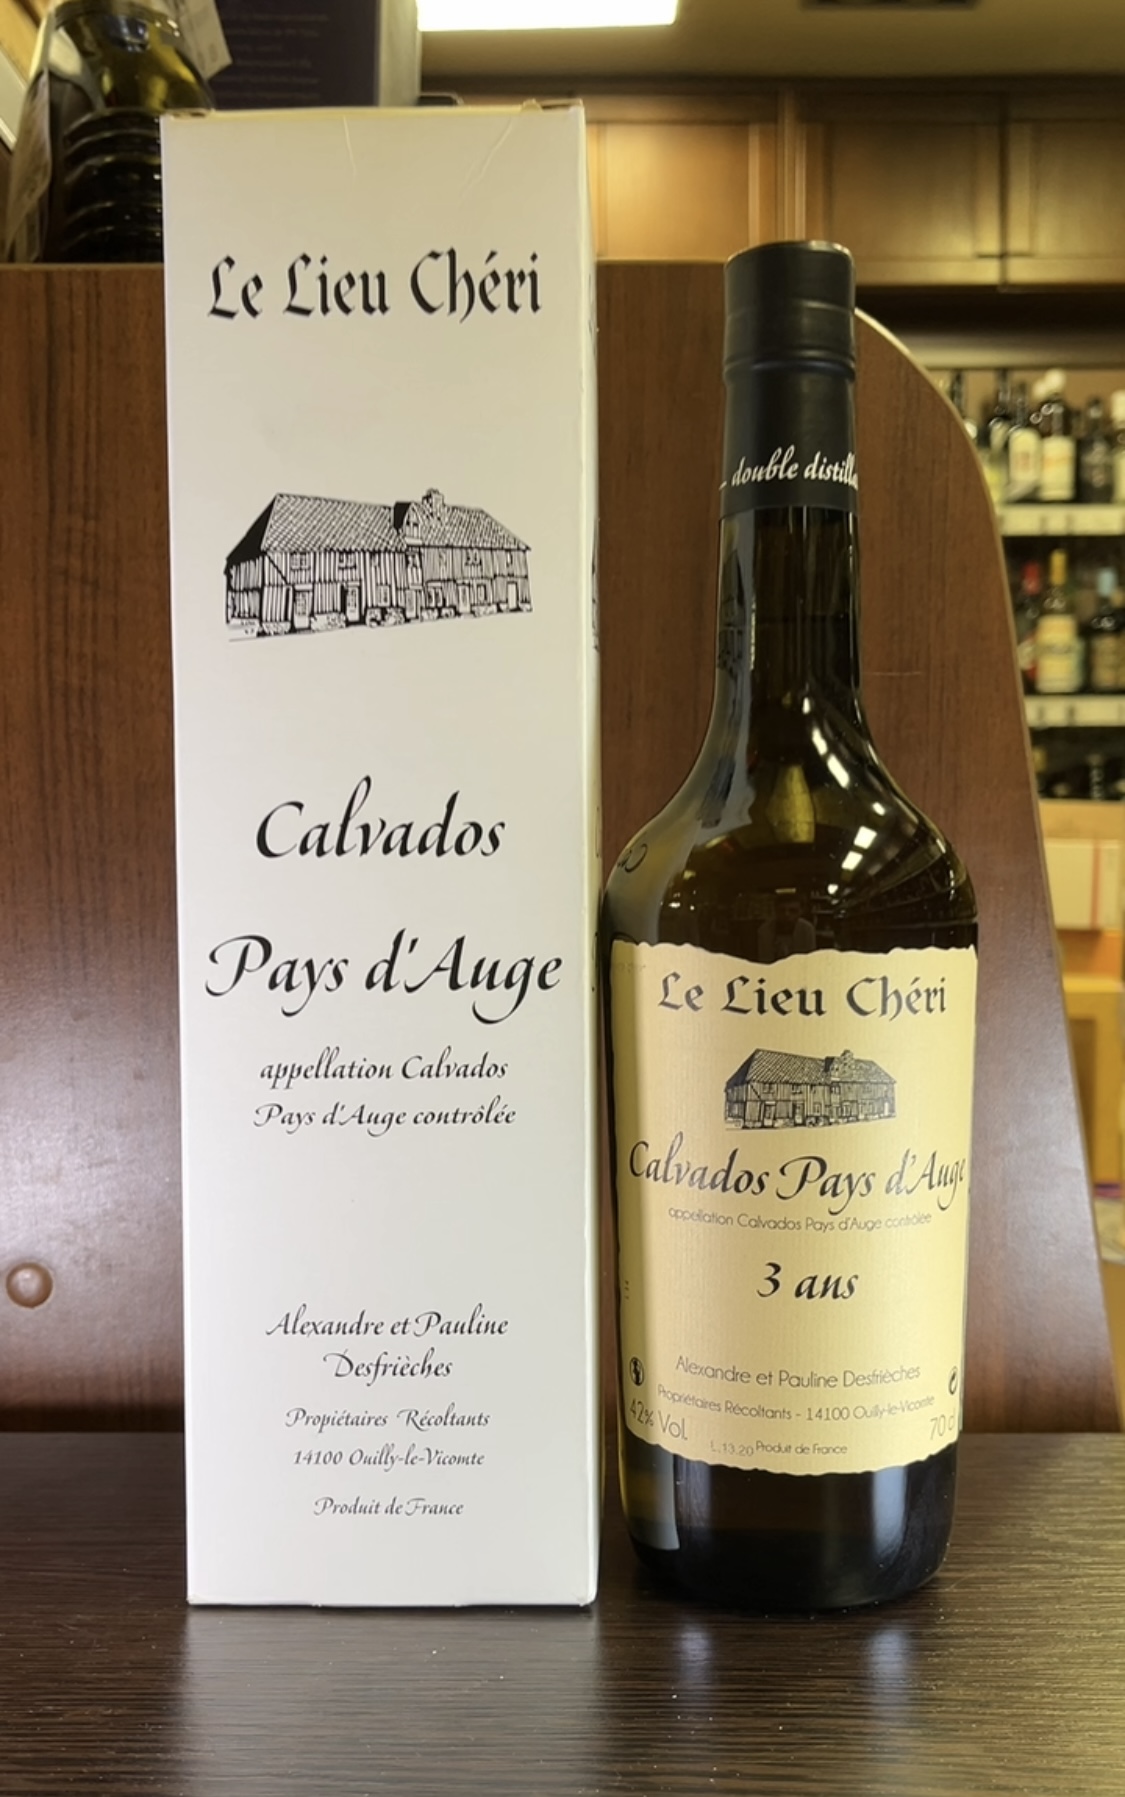 Le Lieu Cheri Calvados Pays d'Auge 3 ans Кальвадос Ле Лье Шери Кальвадос Пэи дОж 3 года 0.7л в подарочной упаковке